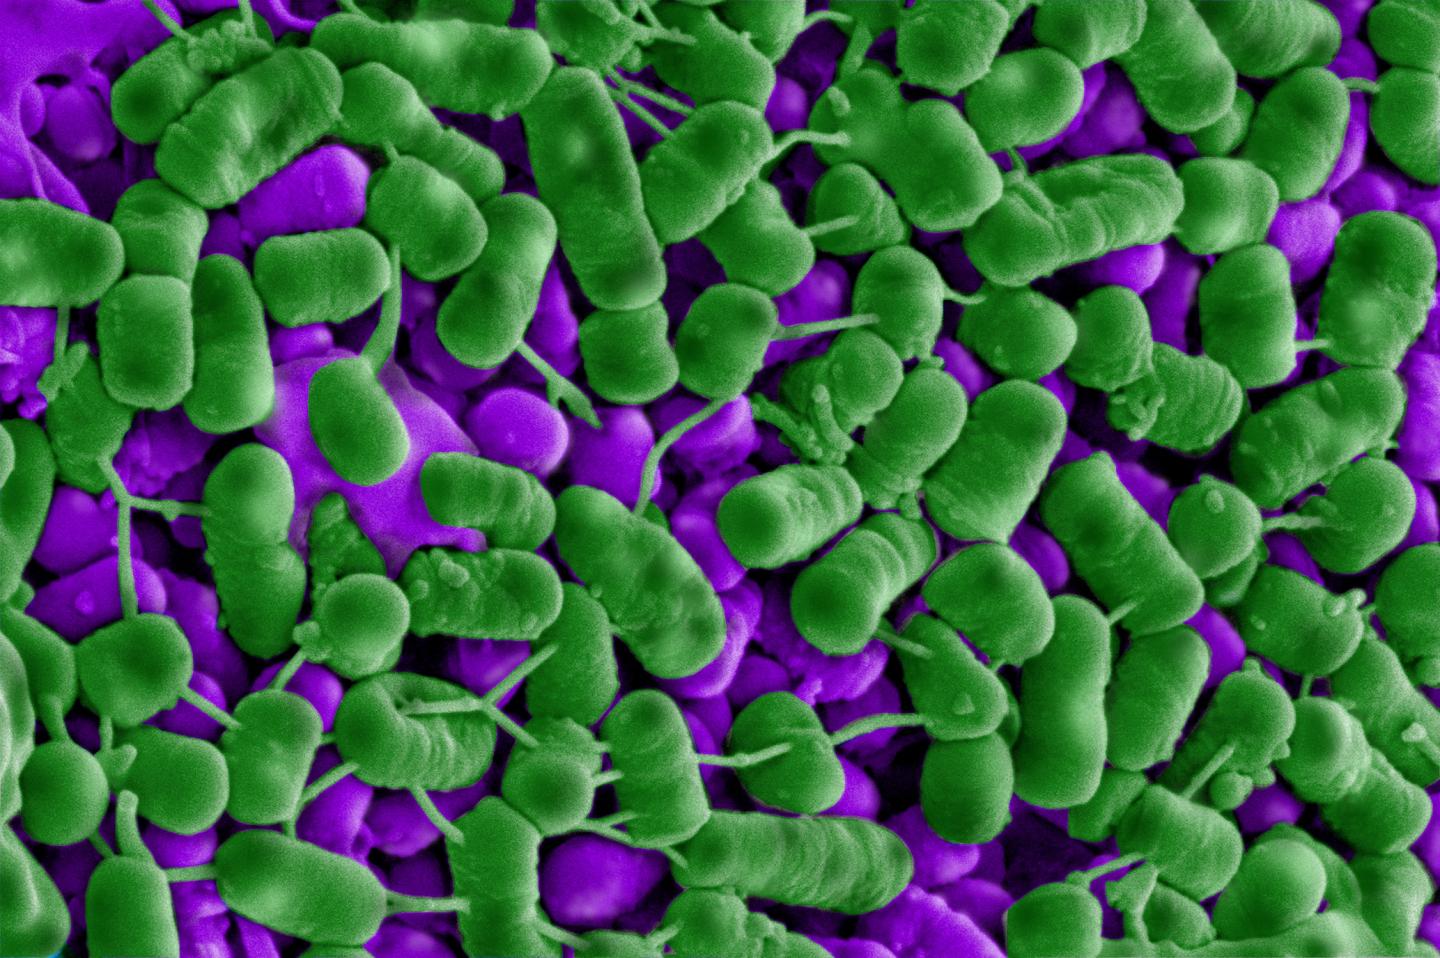 Listeria Bacteria